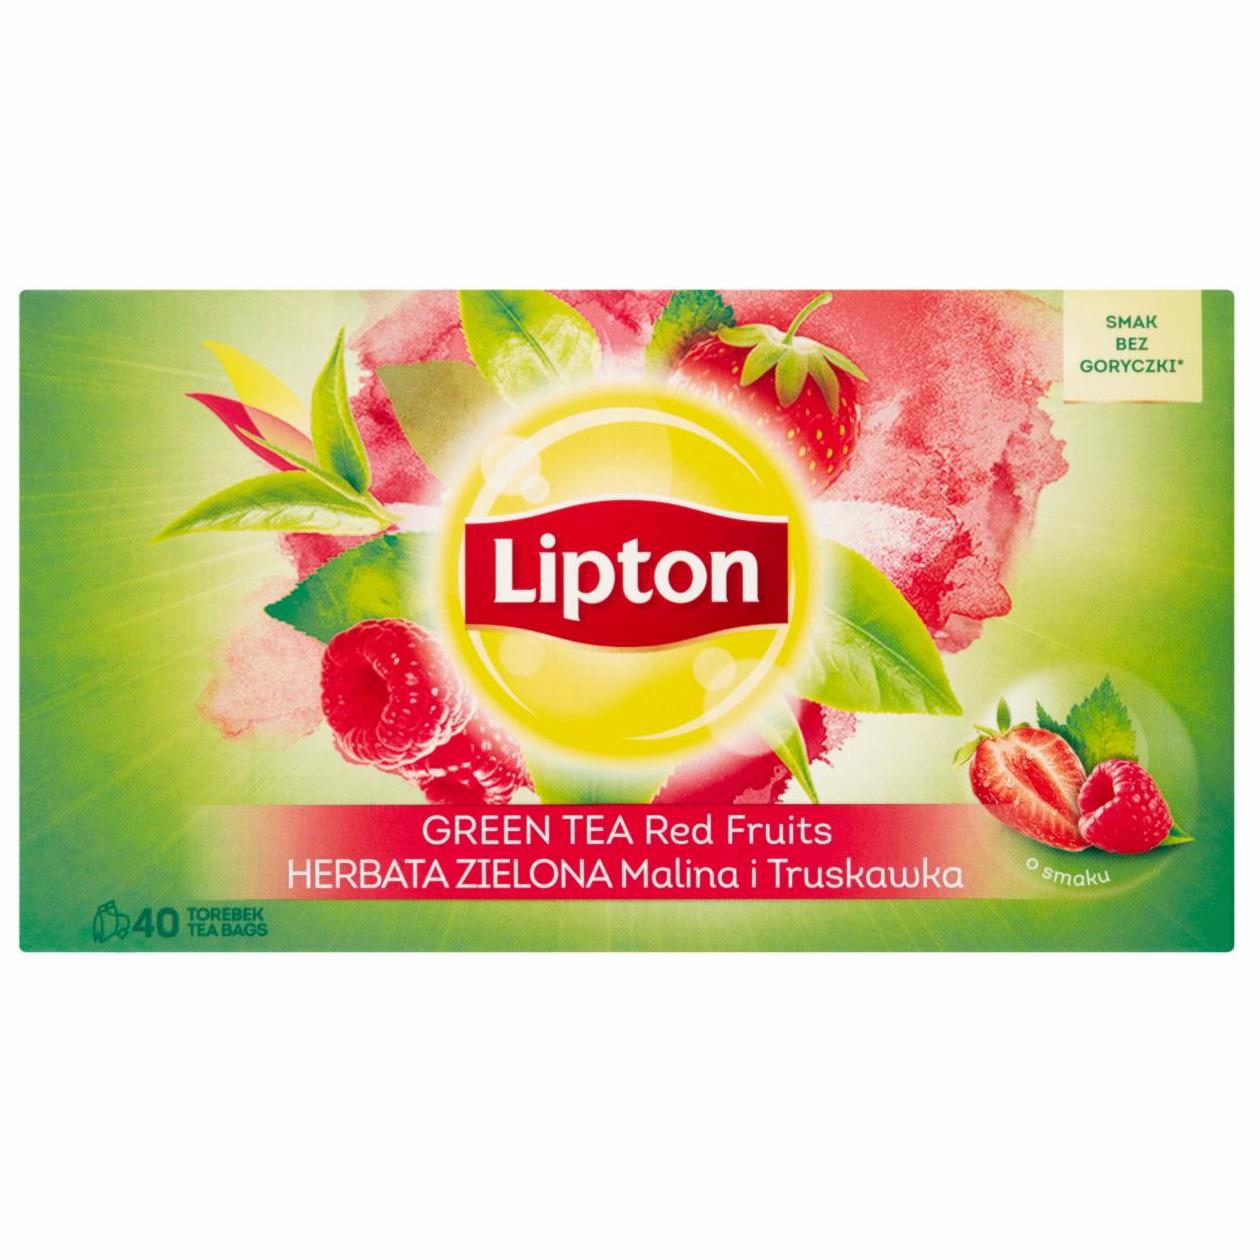 Zdjęcia - Lipton Herbata zielona malina i truskawka 56 g (40 torebek)